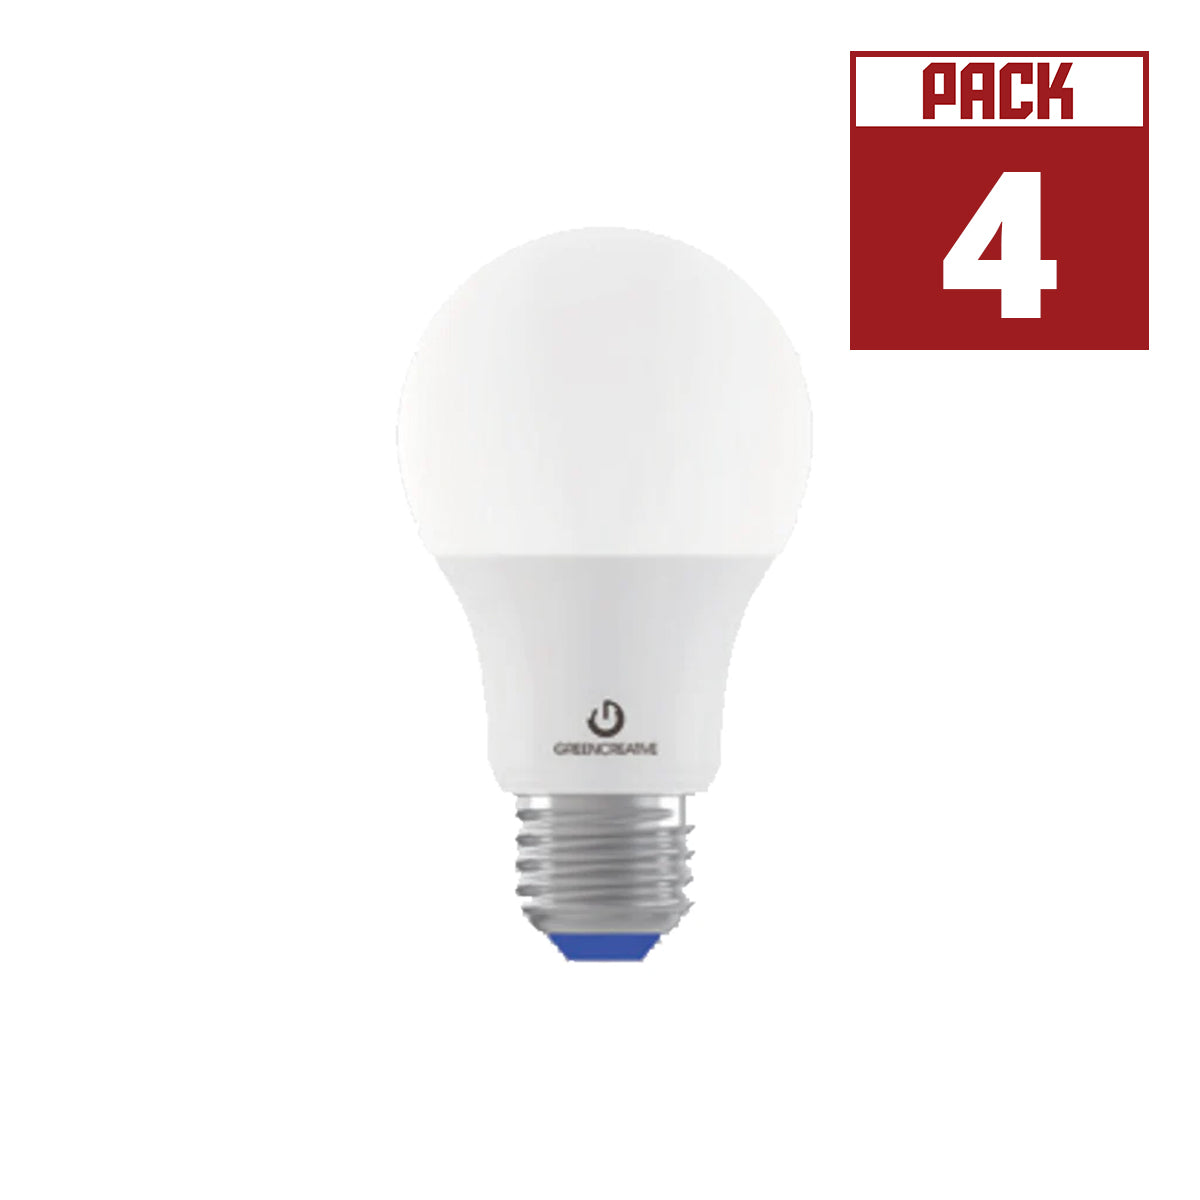 A19 LED Bulb, 5 Watt, 800 Lumens, 3000K, E26 Medium Base, Frosted Finish, Pack Of 4